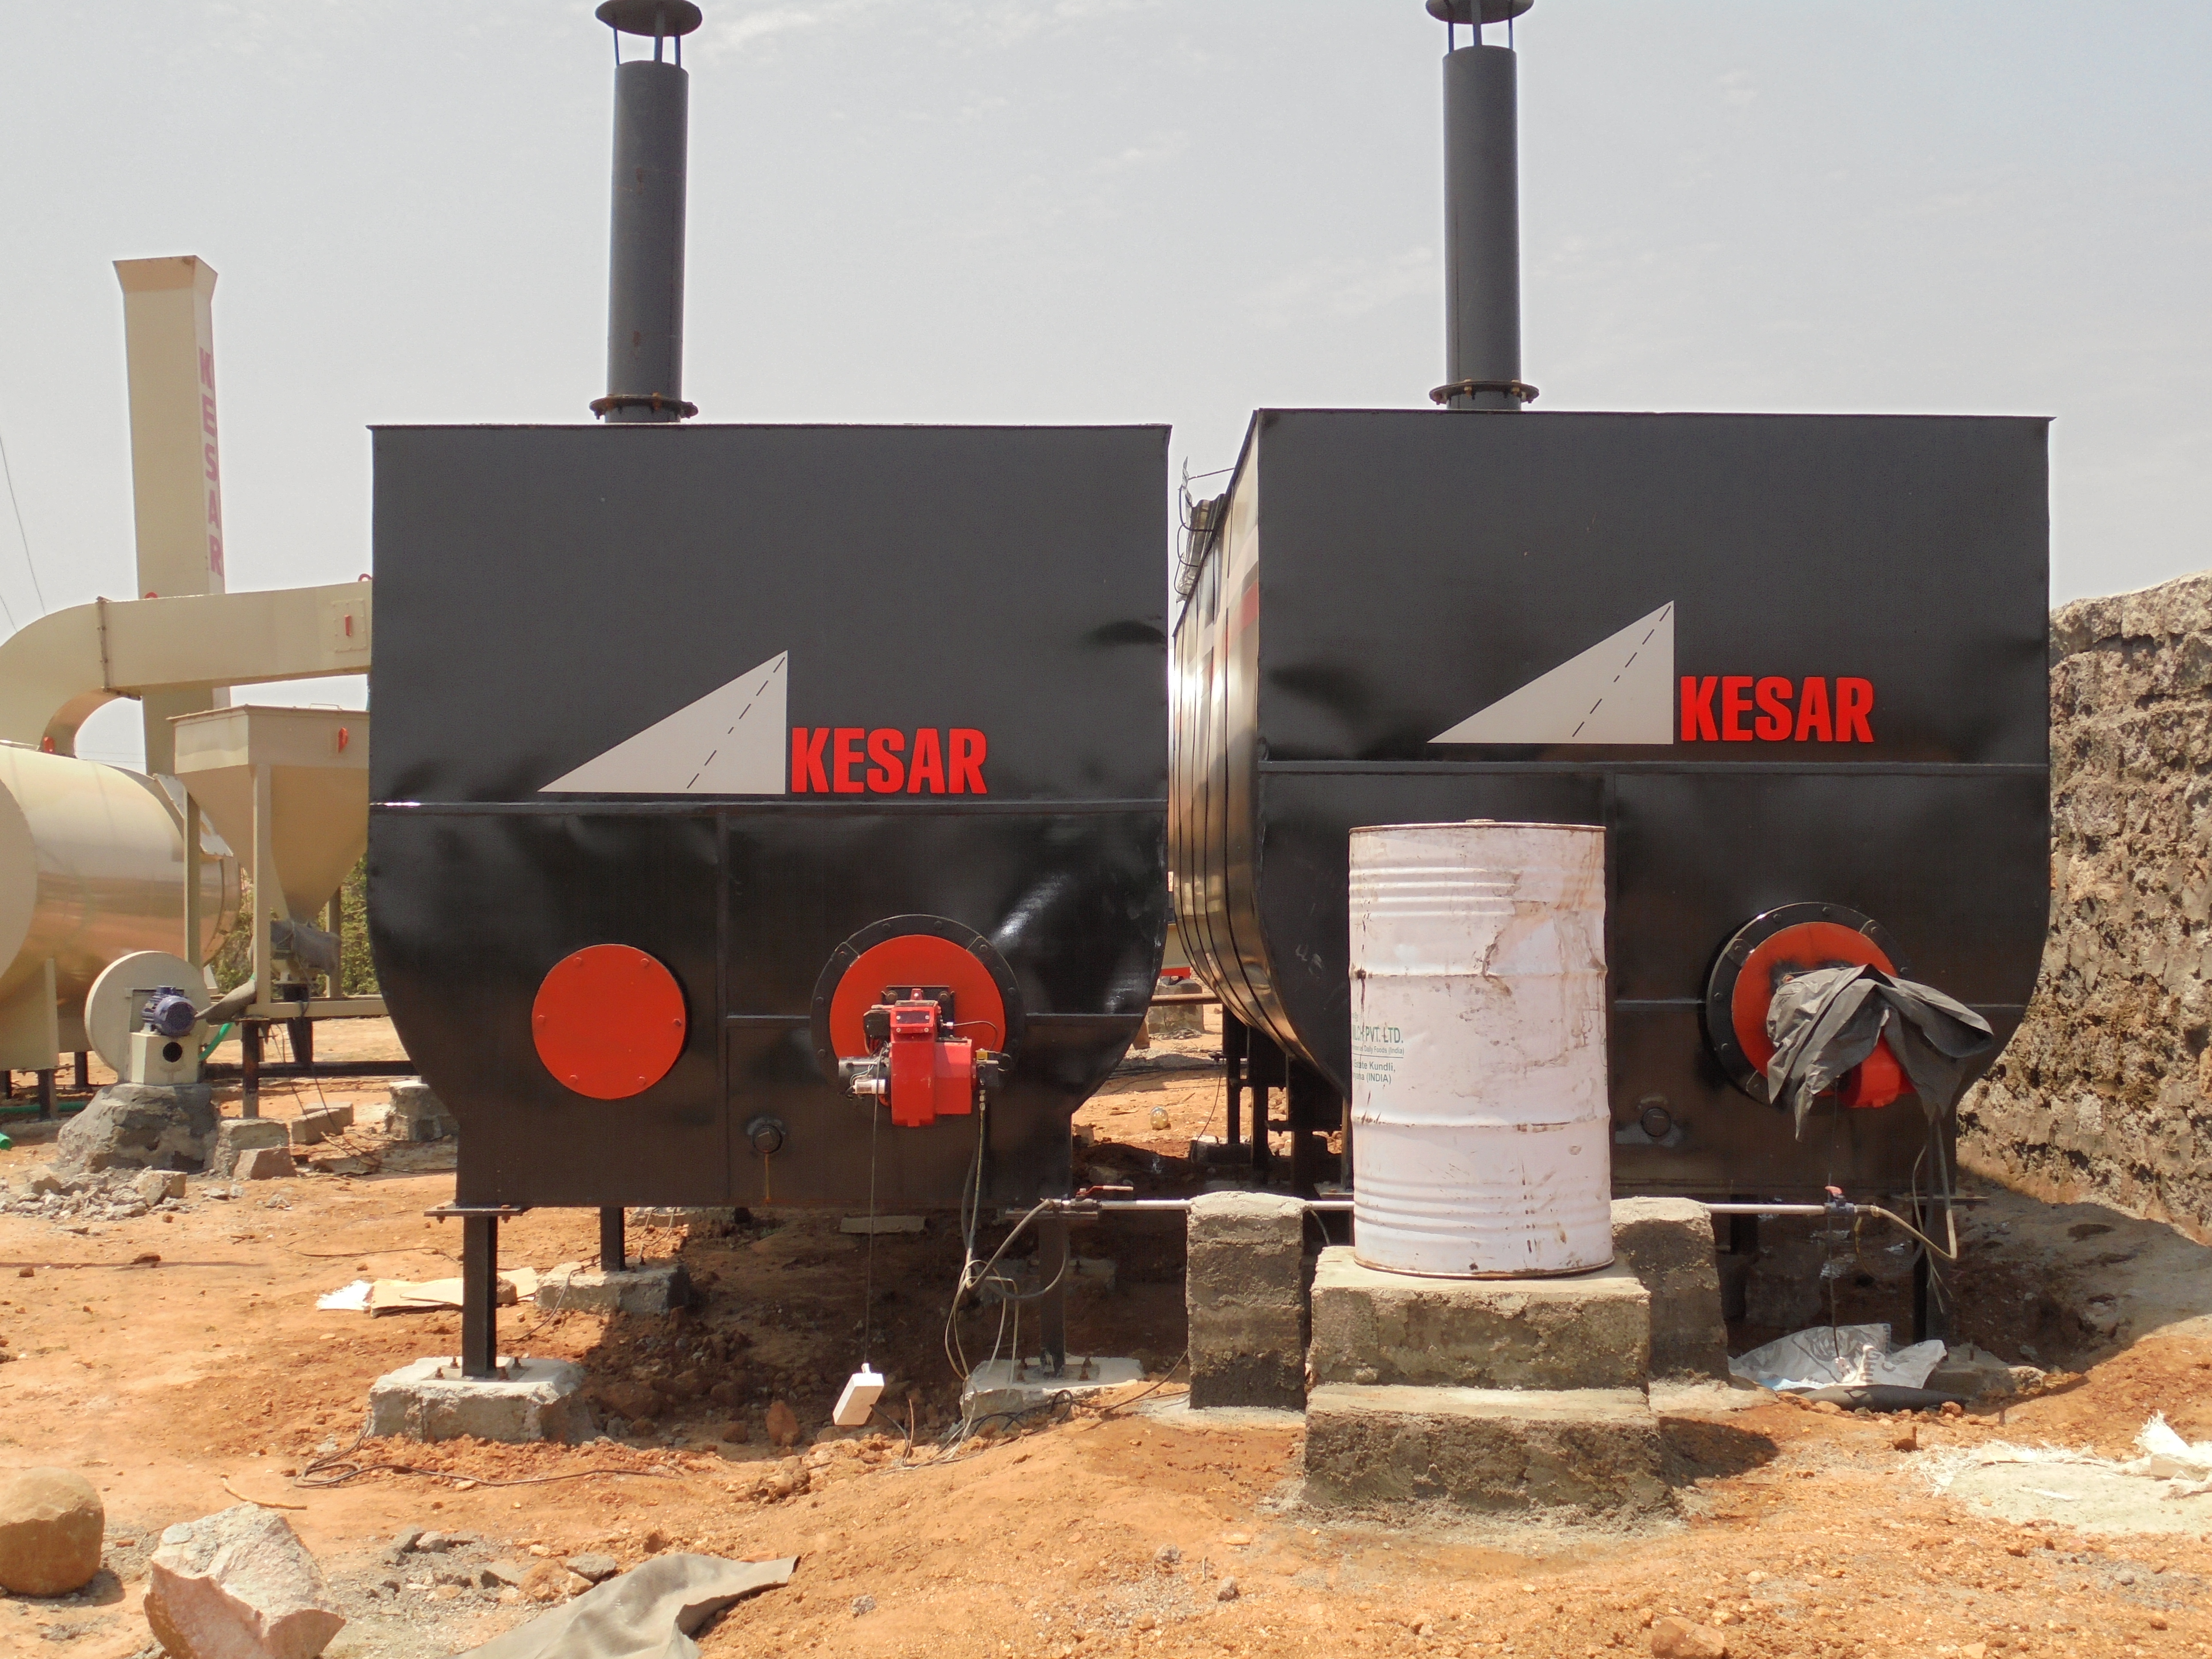 Bitumen Heating And Storage Tanks